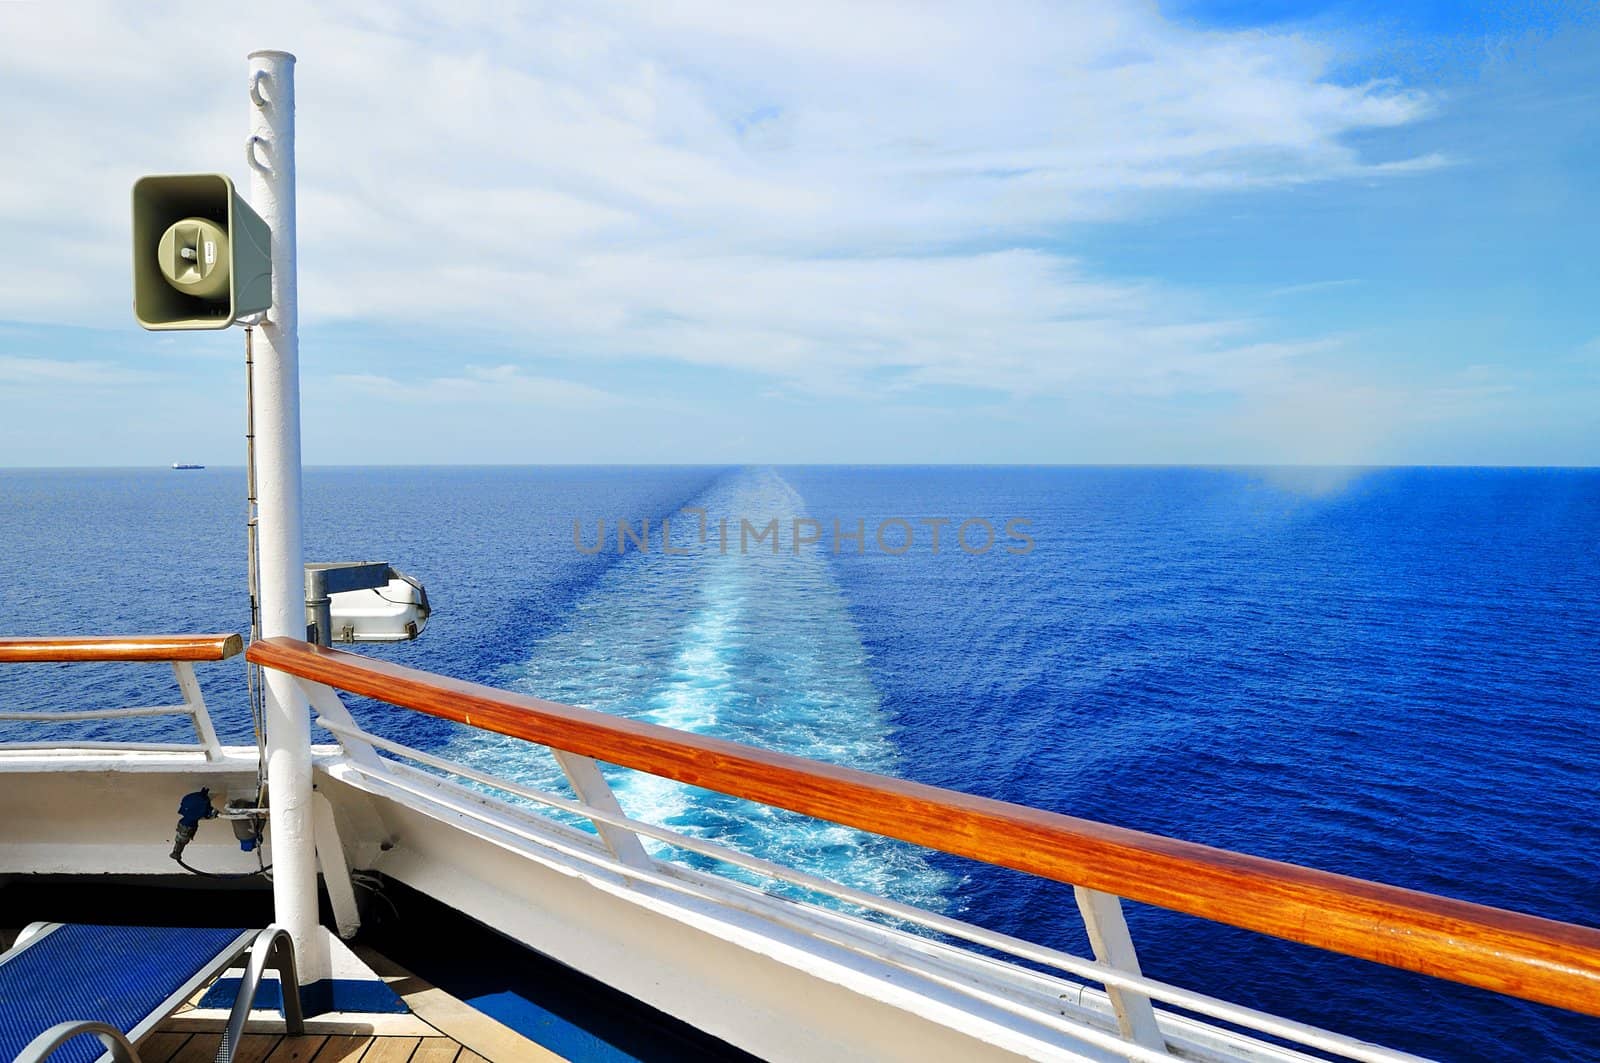 A cruise ship leaves a long wake in the Caribbean Sea near the Cayman Islands.